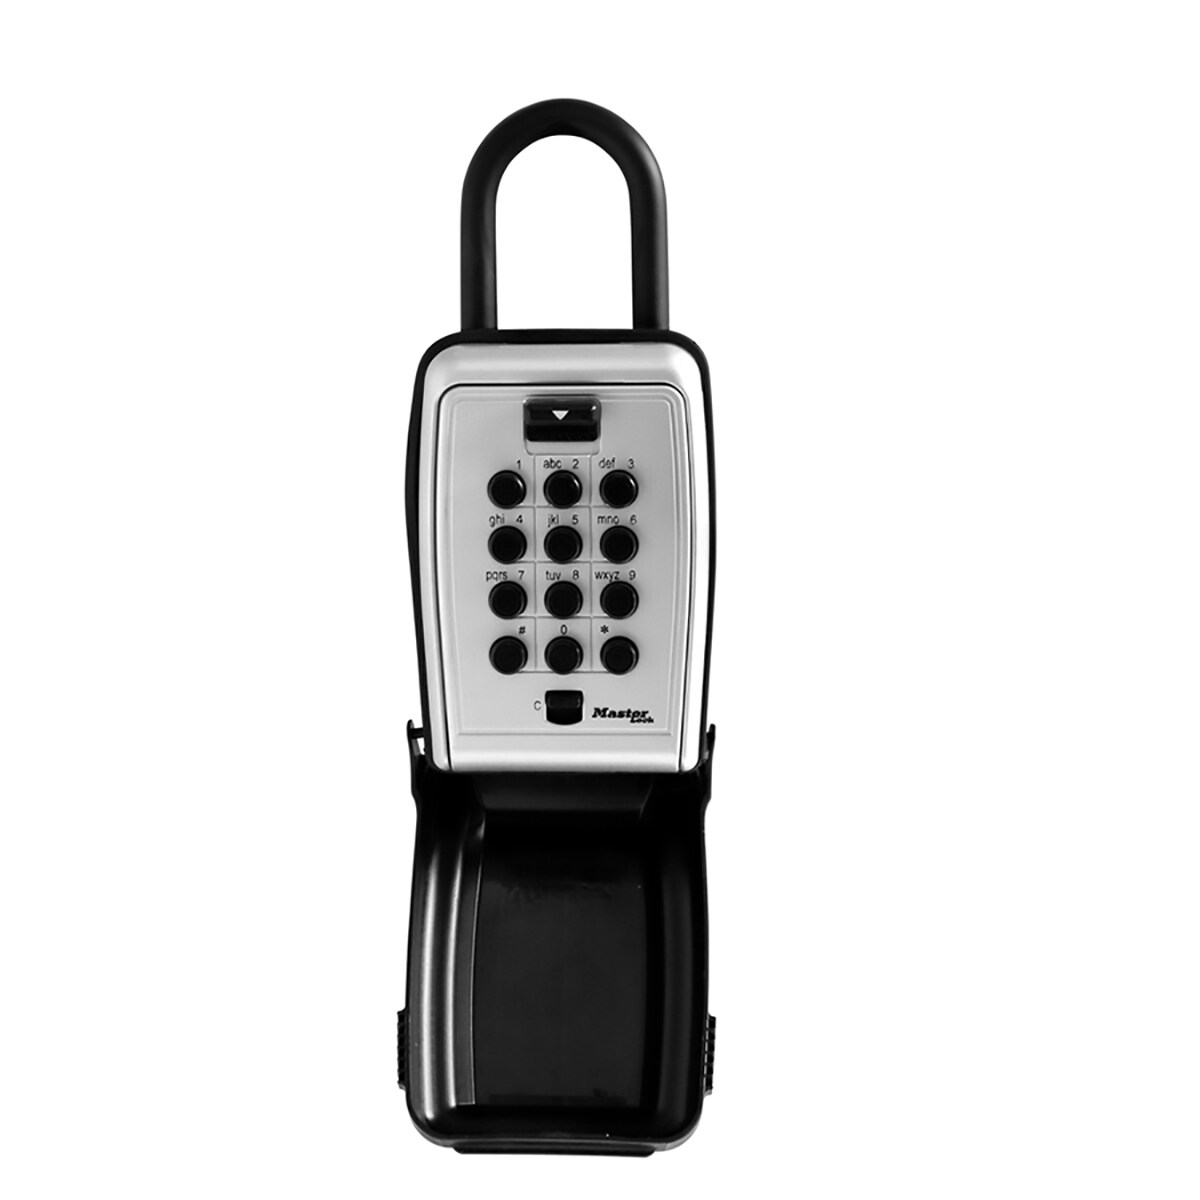 AMRIU Key Lock Box Storage Combination Realtor Key Safe Box Push Button Set Your 